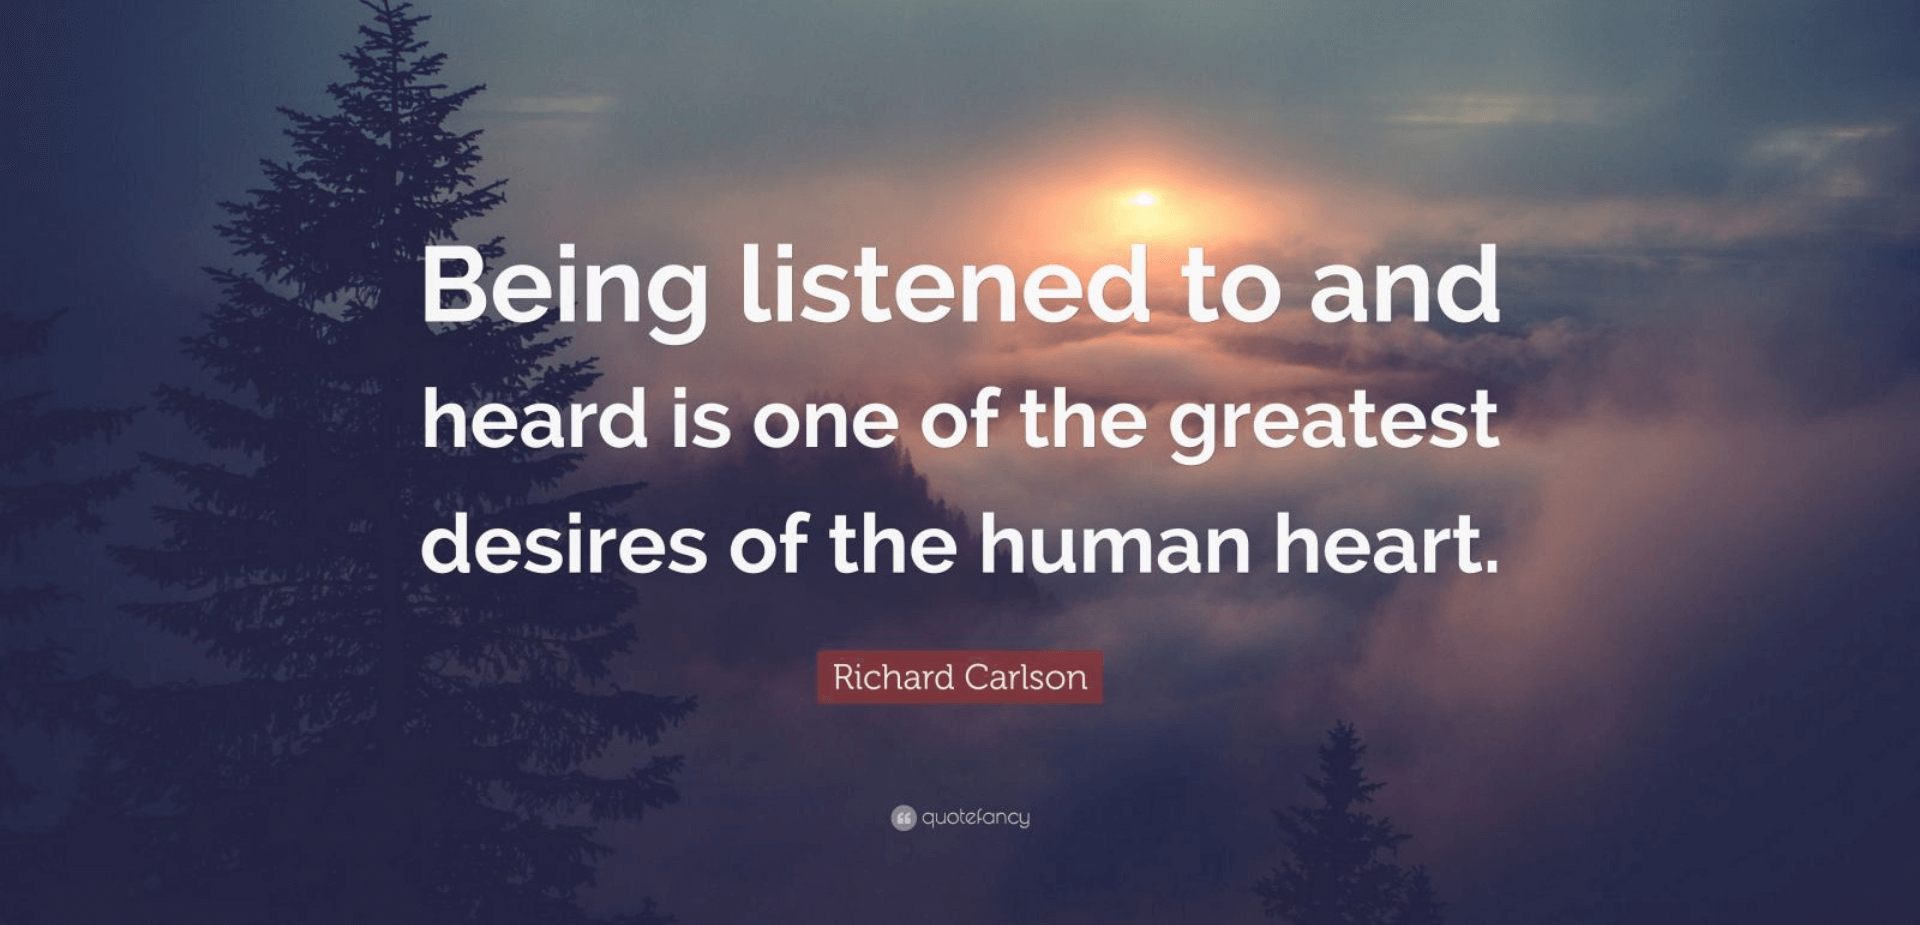 Richard Carlson quote